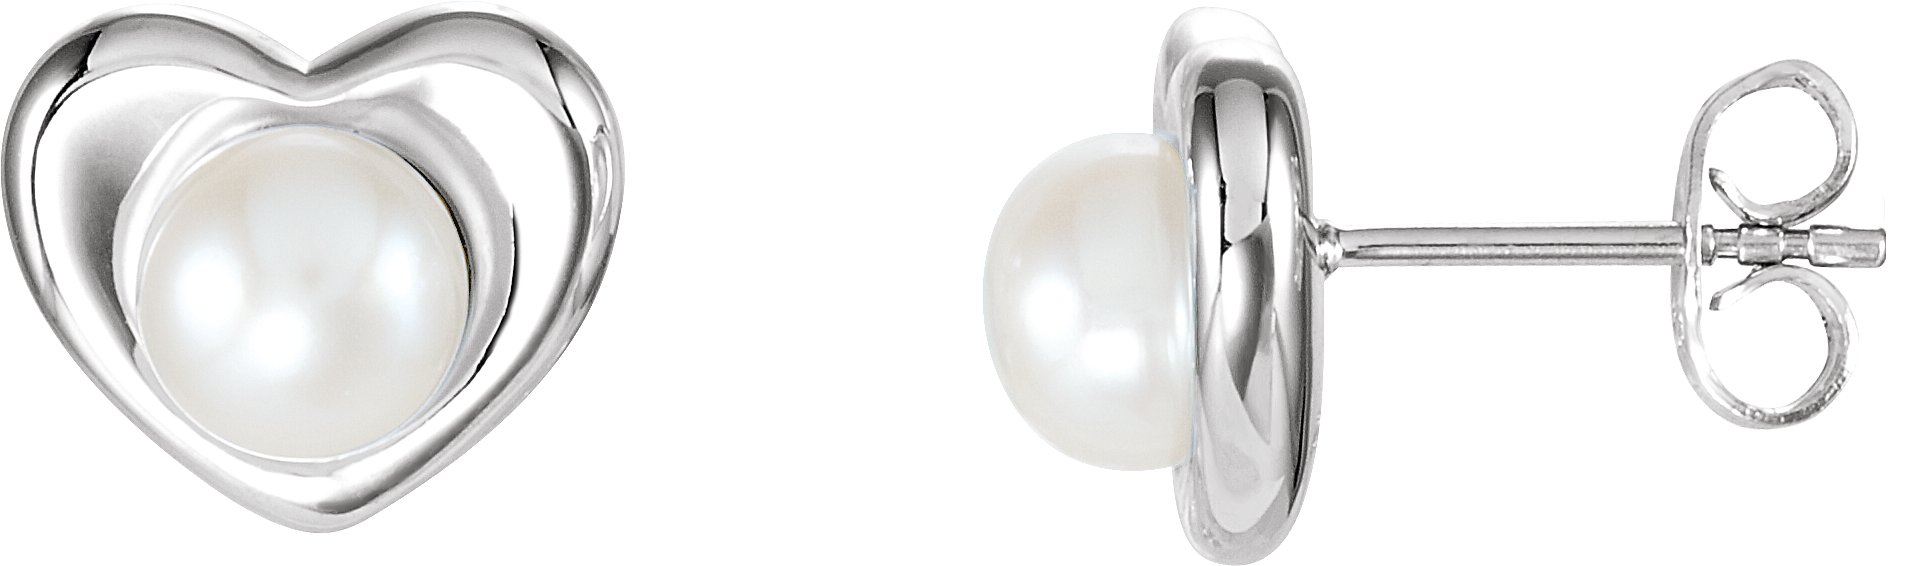 Sterling Silver Cultured White Freshwater Pearl Heart Earrings